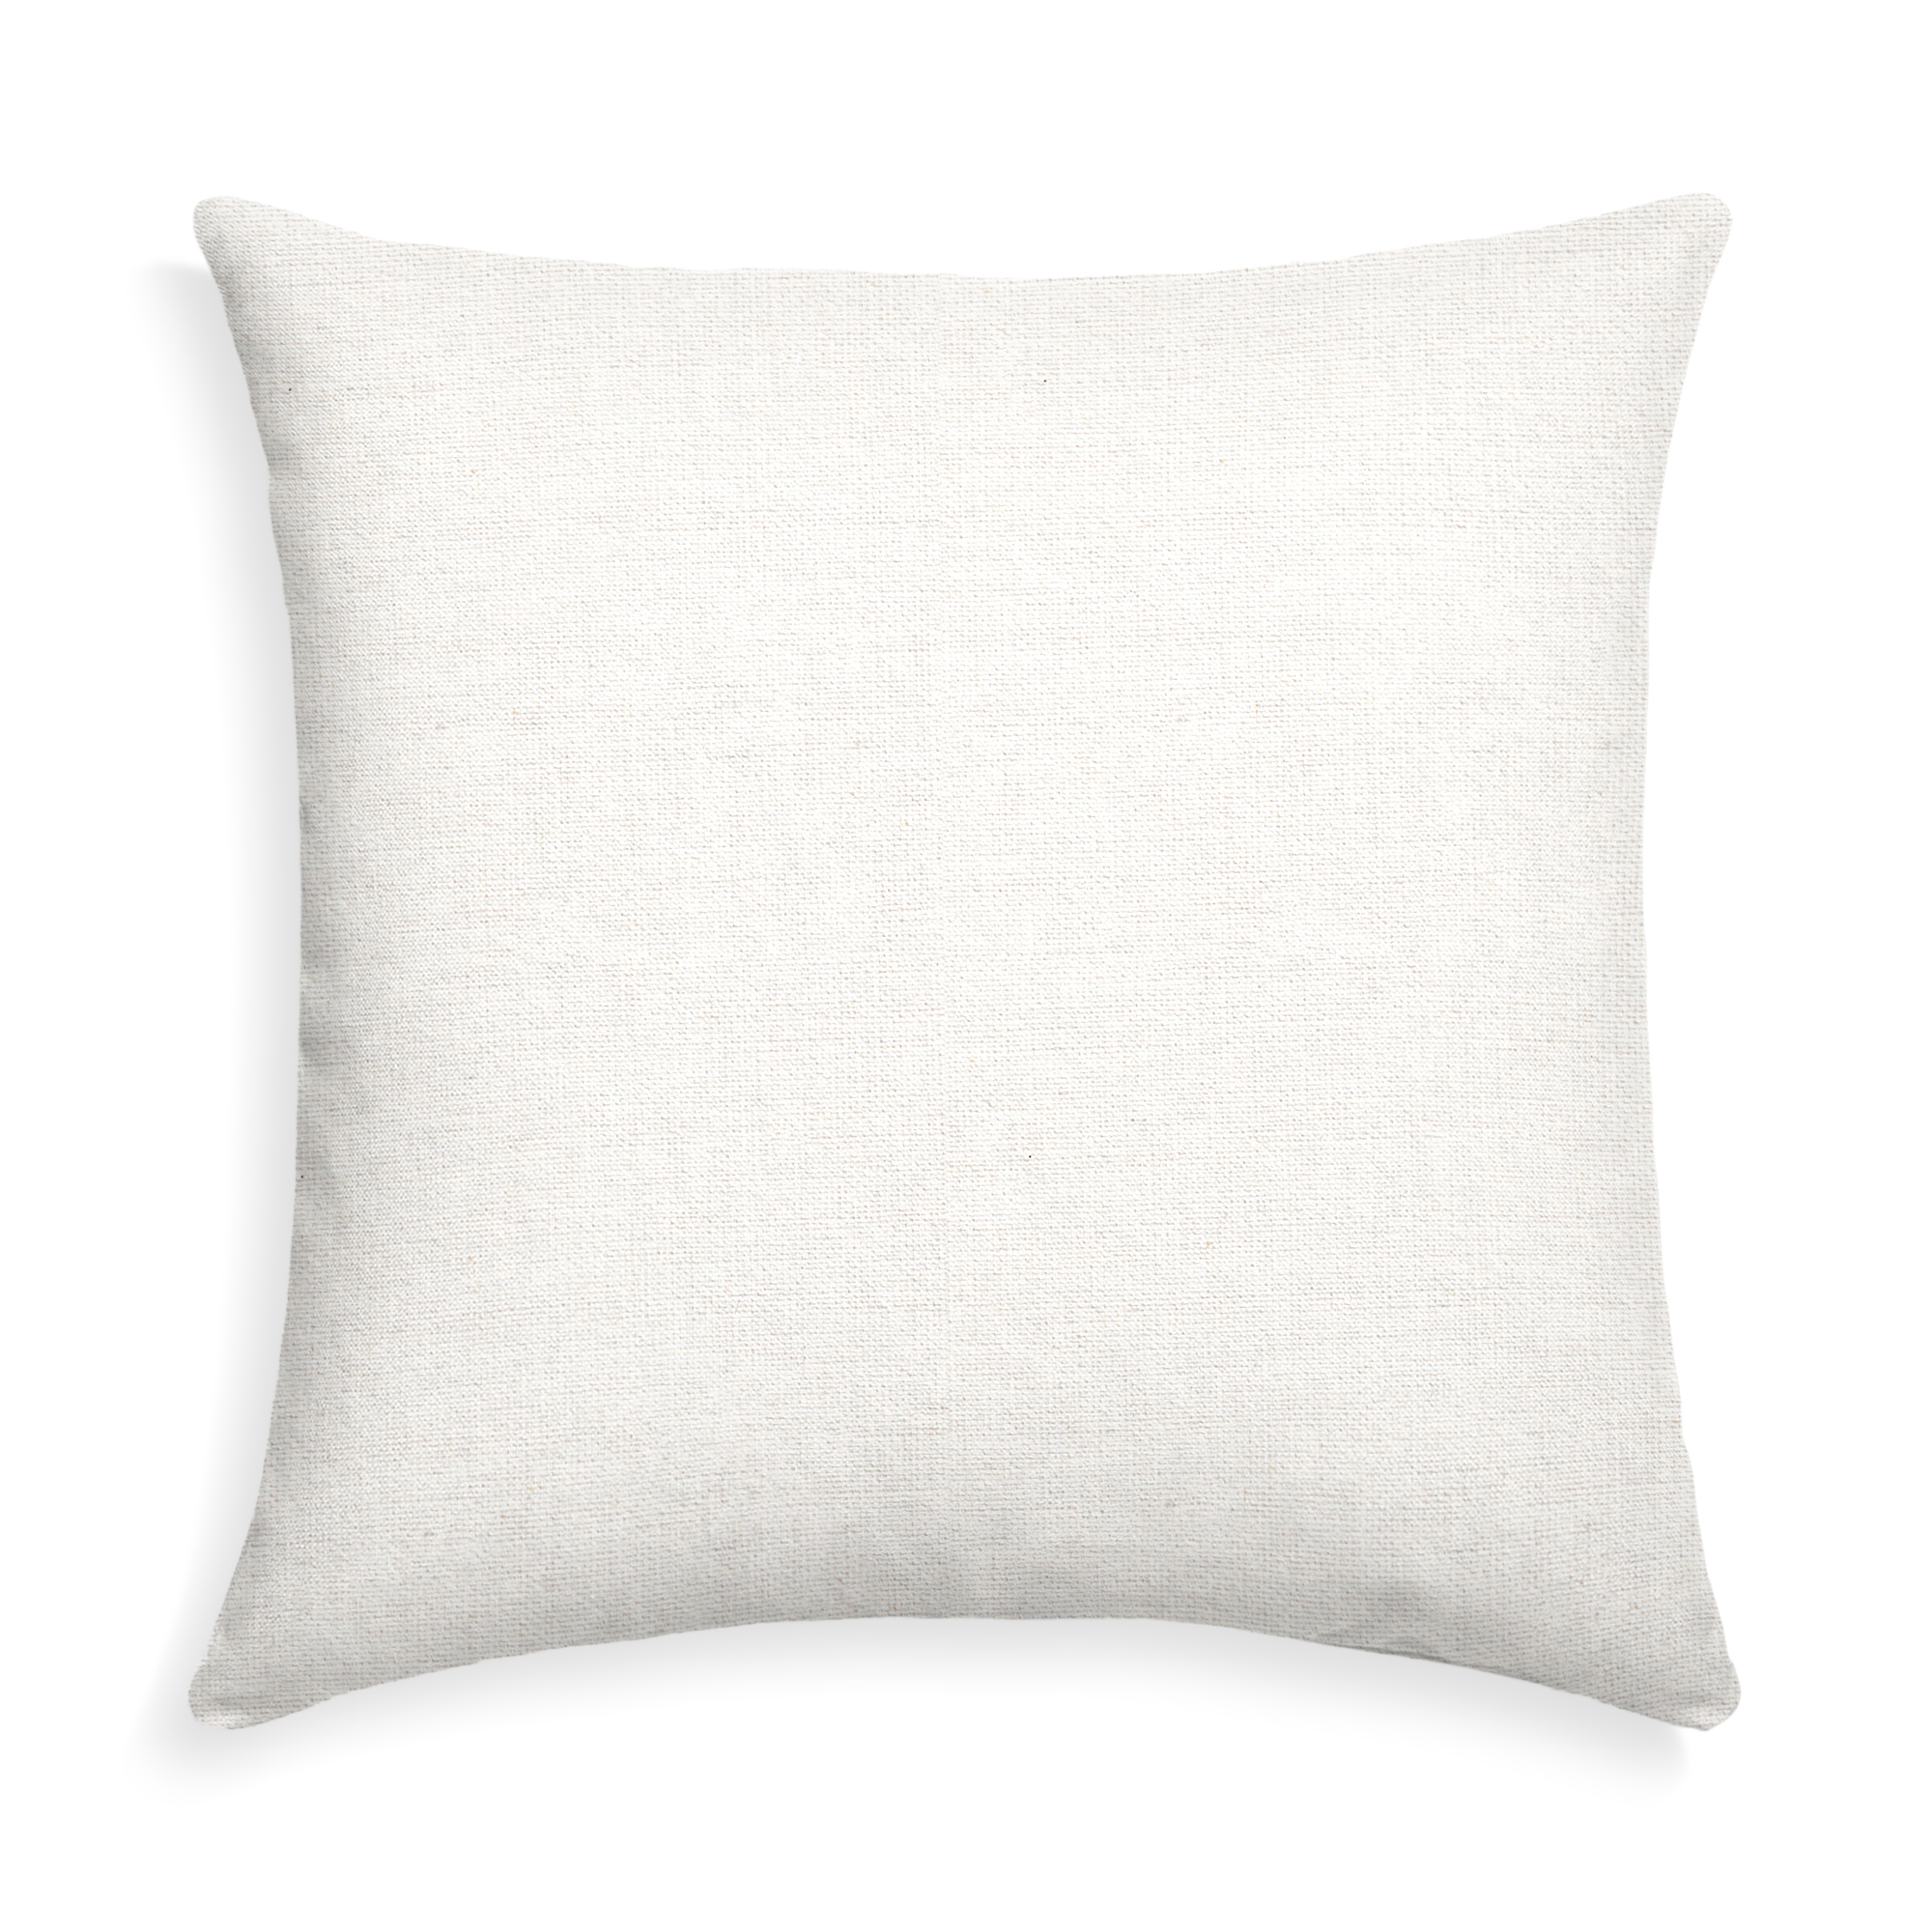 Natural White Linen Pillow